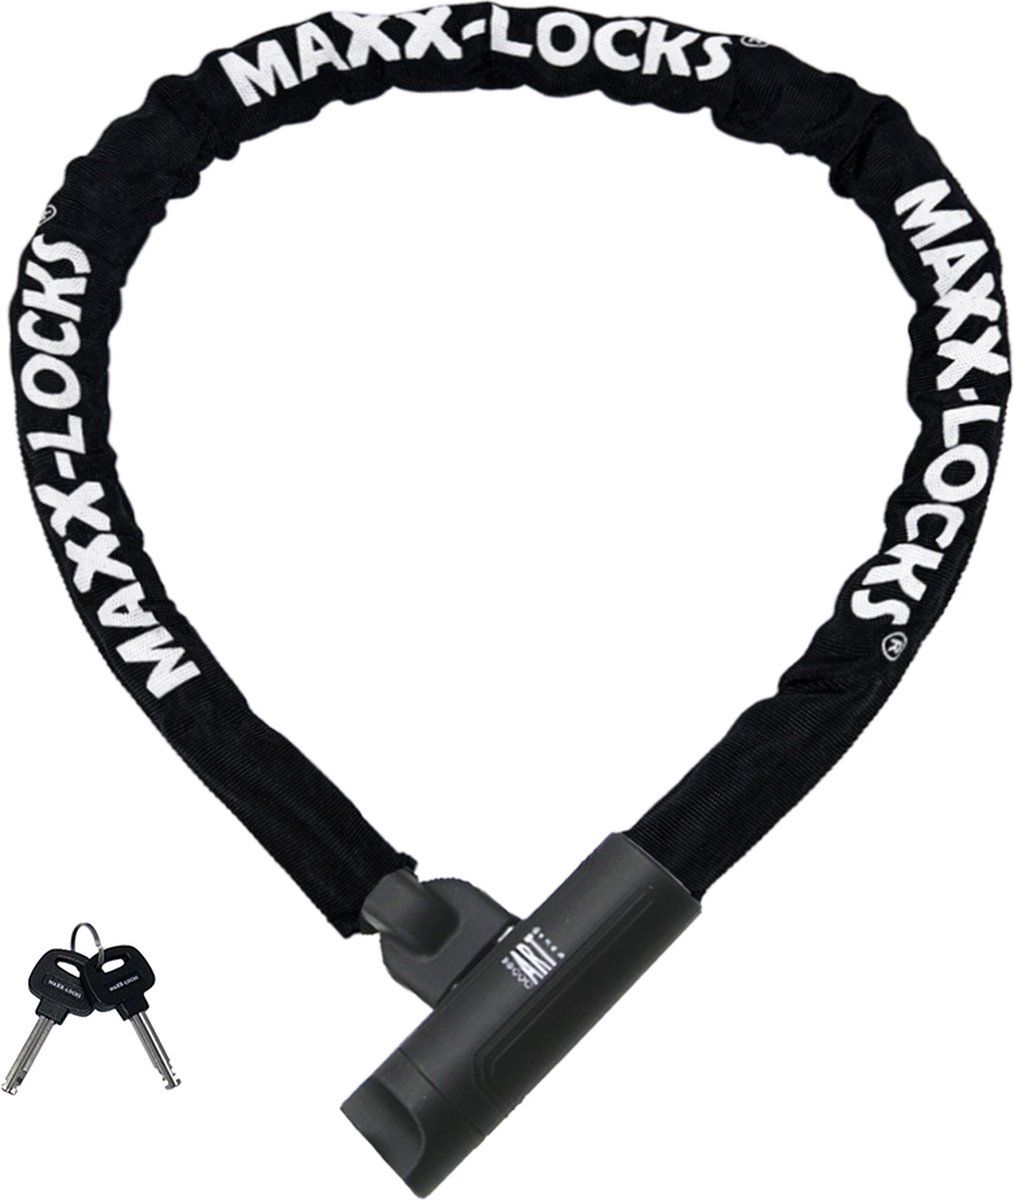 Maxx-Locks Picton Fietsslot ART 2 - 90cm – Zwart